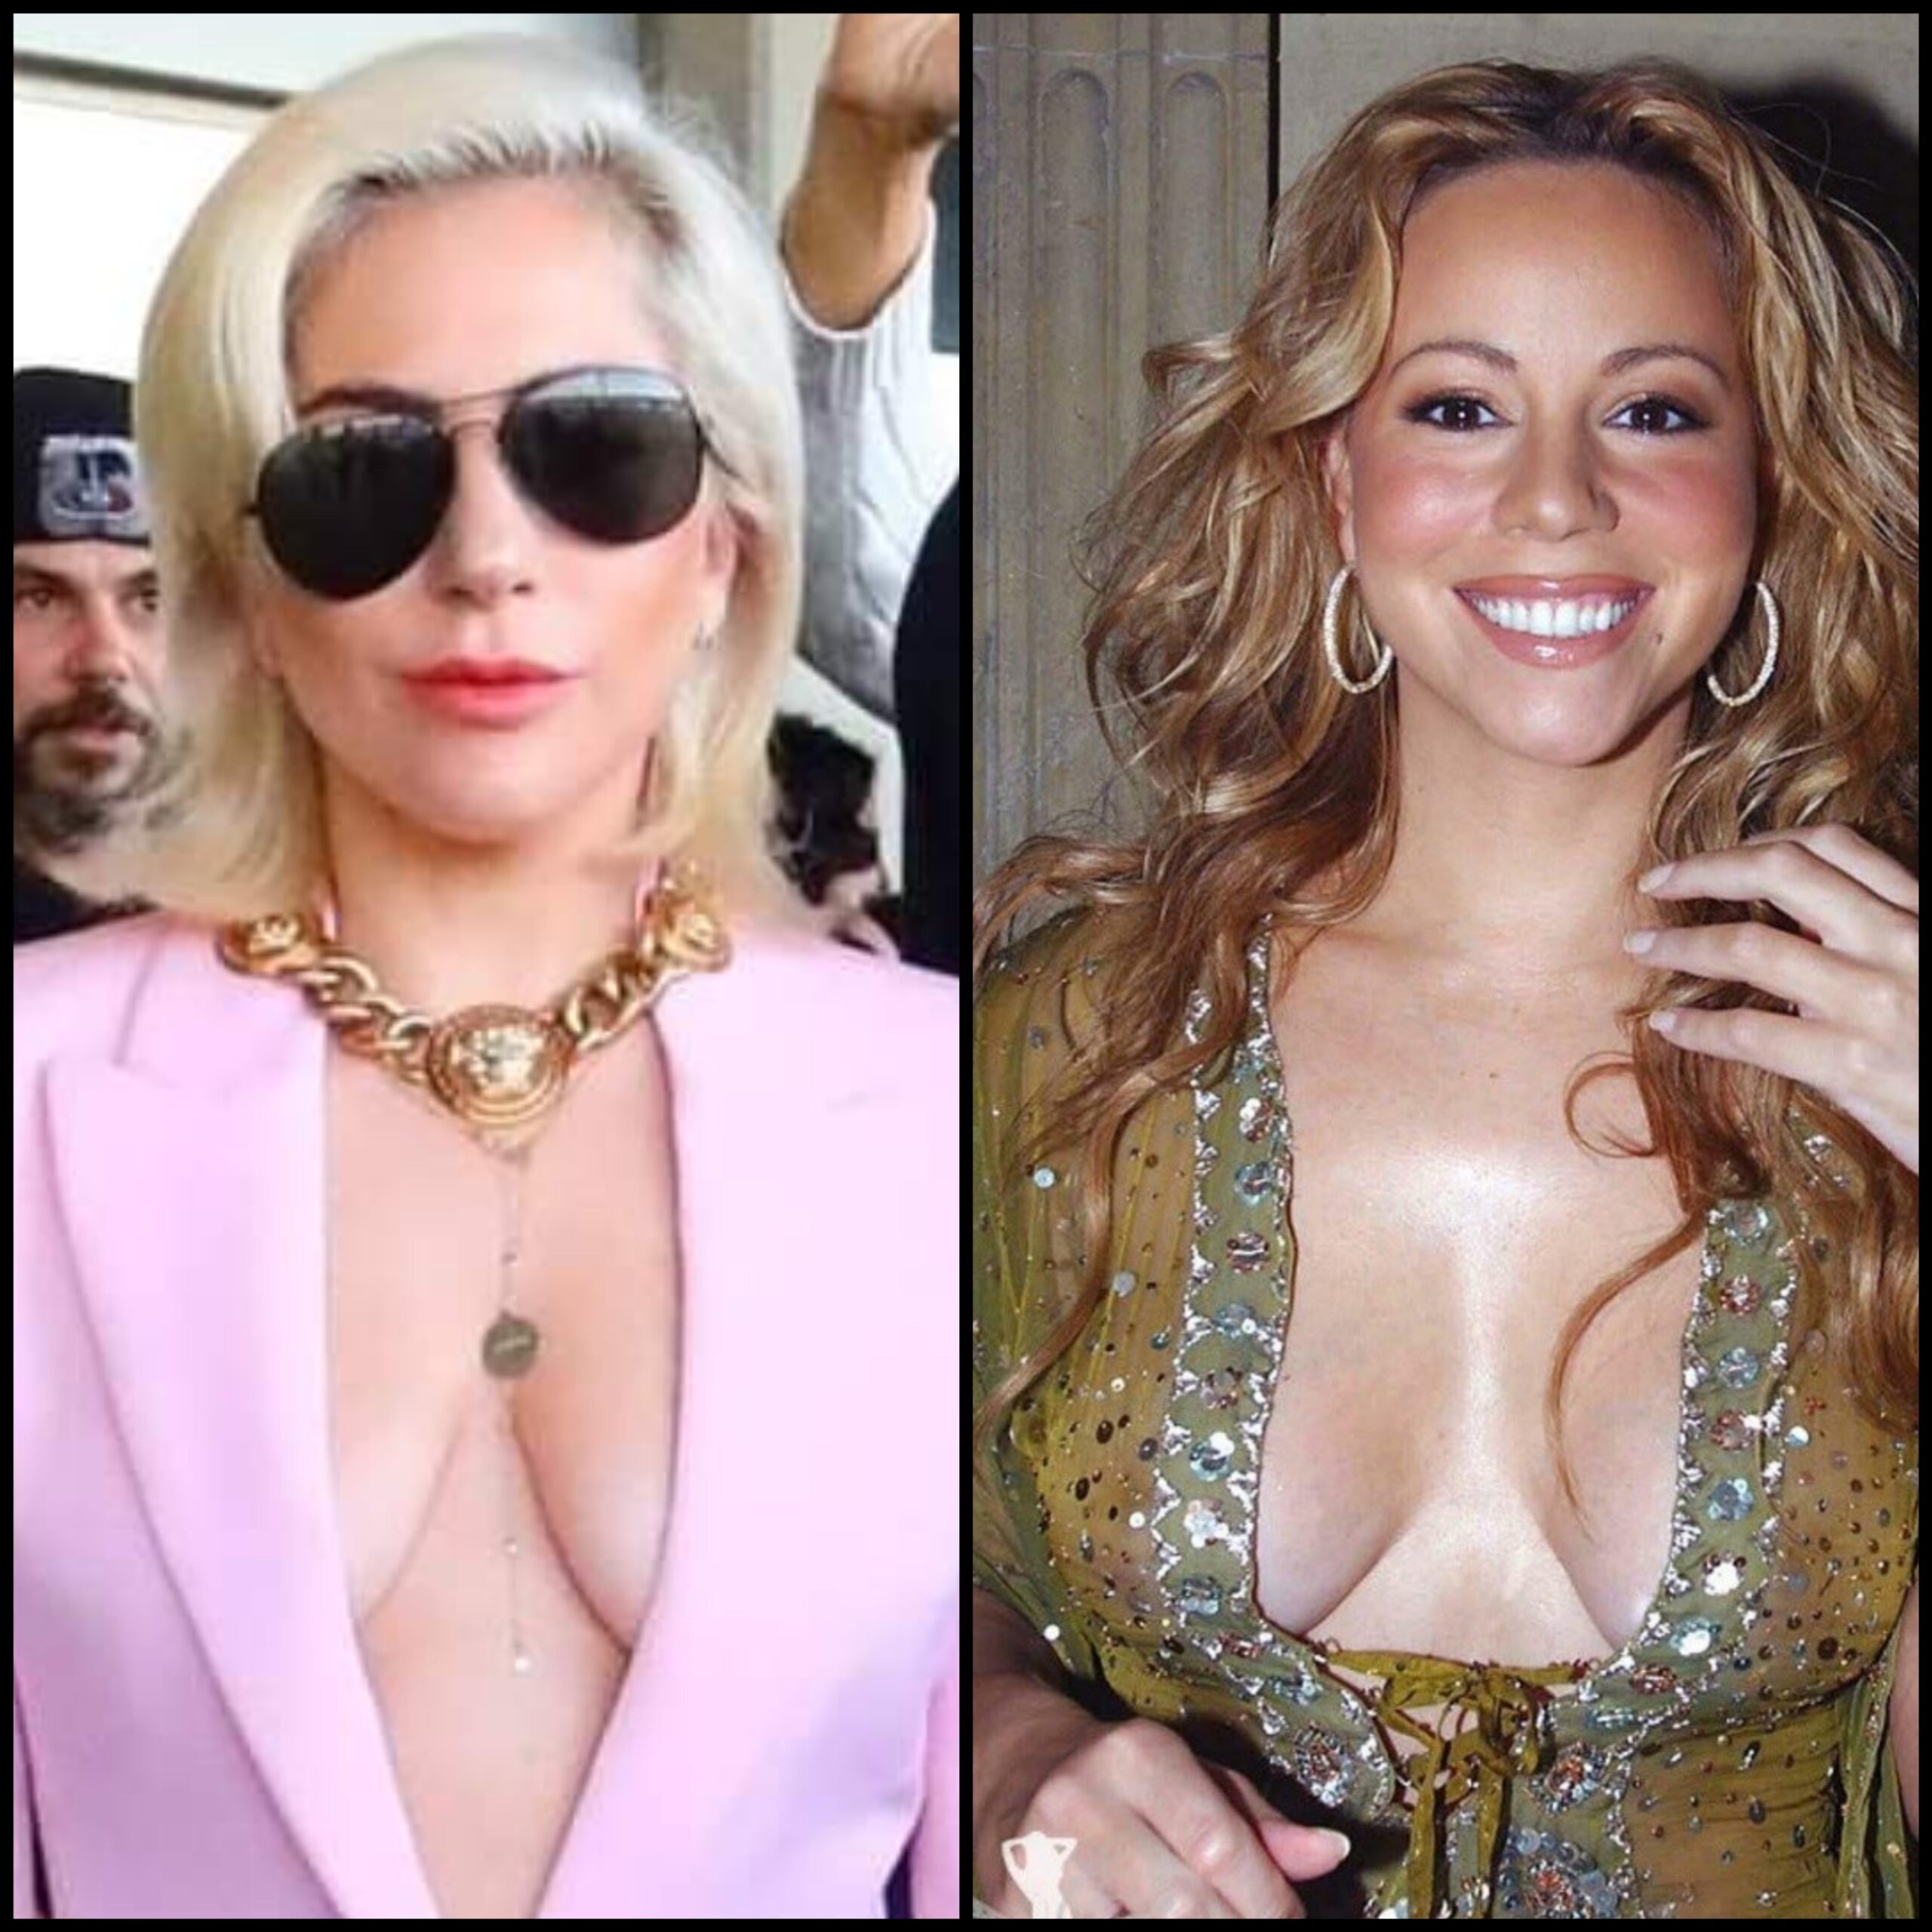 I love a good cleavage especially those of Lady Gaga